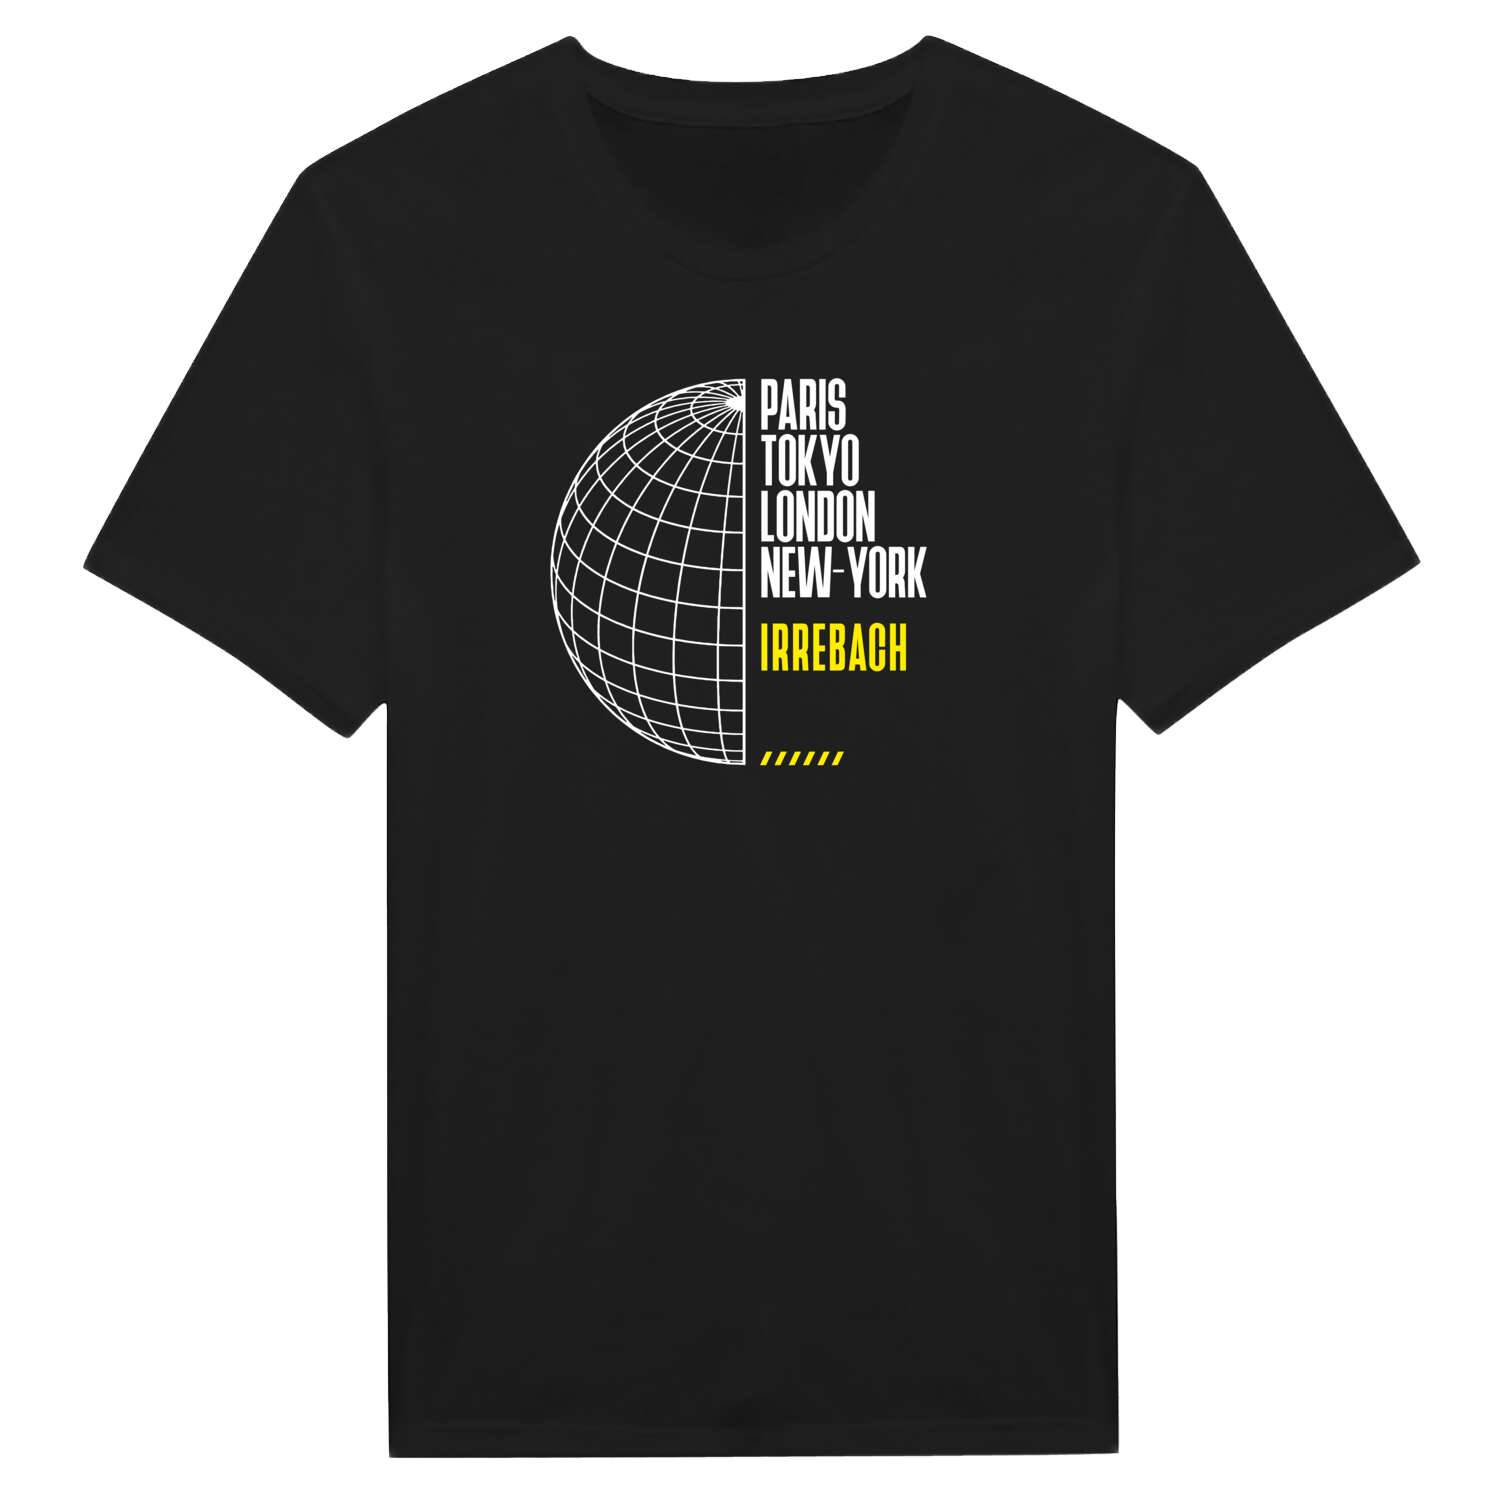 Irrebach T-Shirt »Paris Tokyo London«